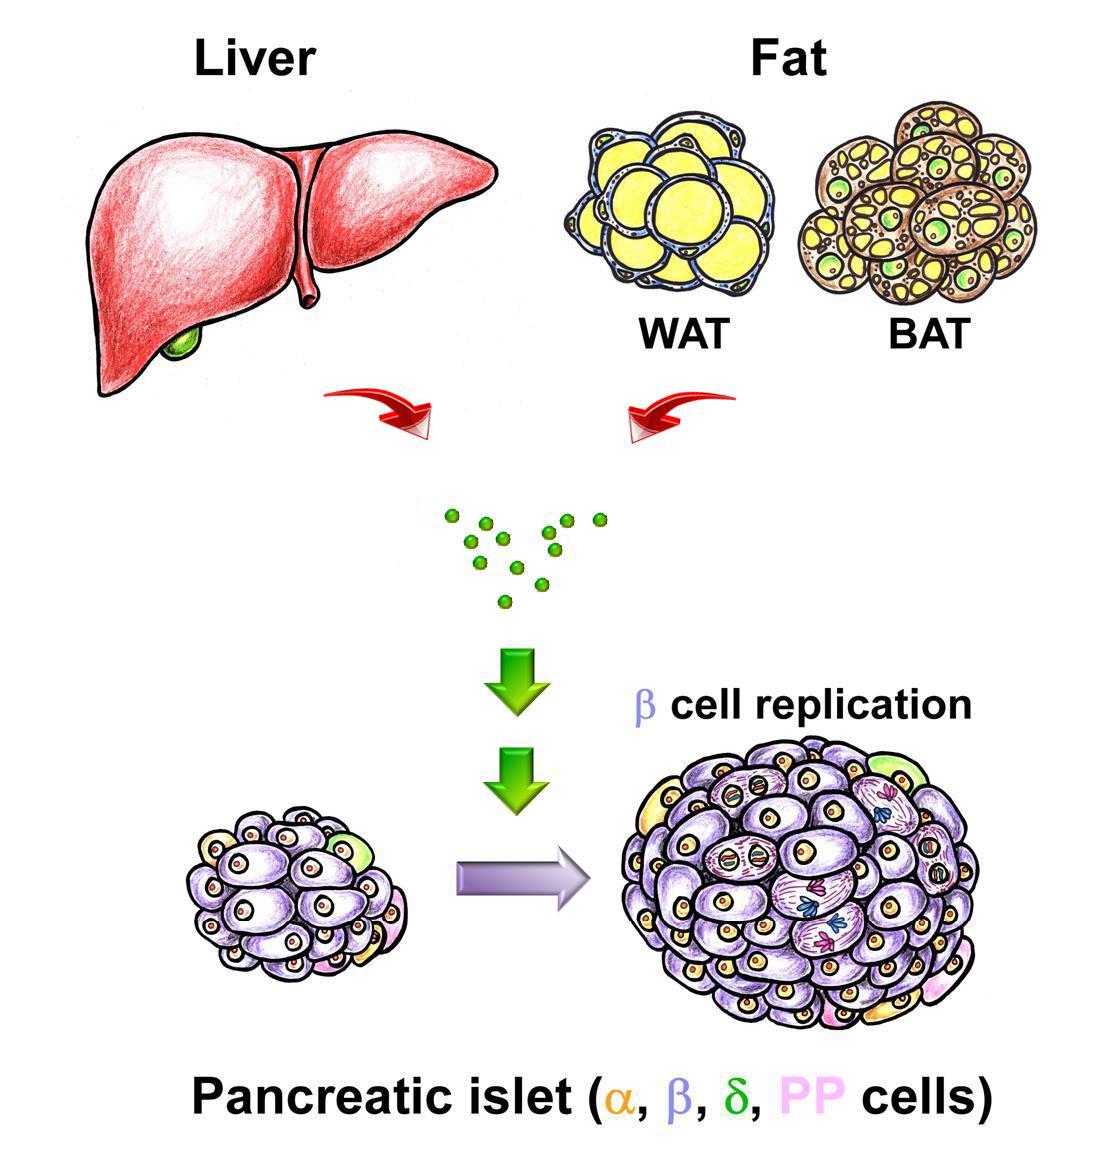 Pancreatic Islet with liver, WAT, BAT